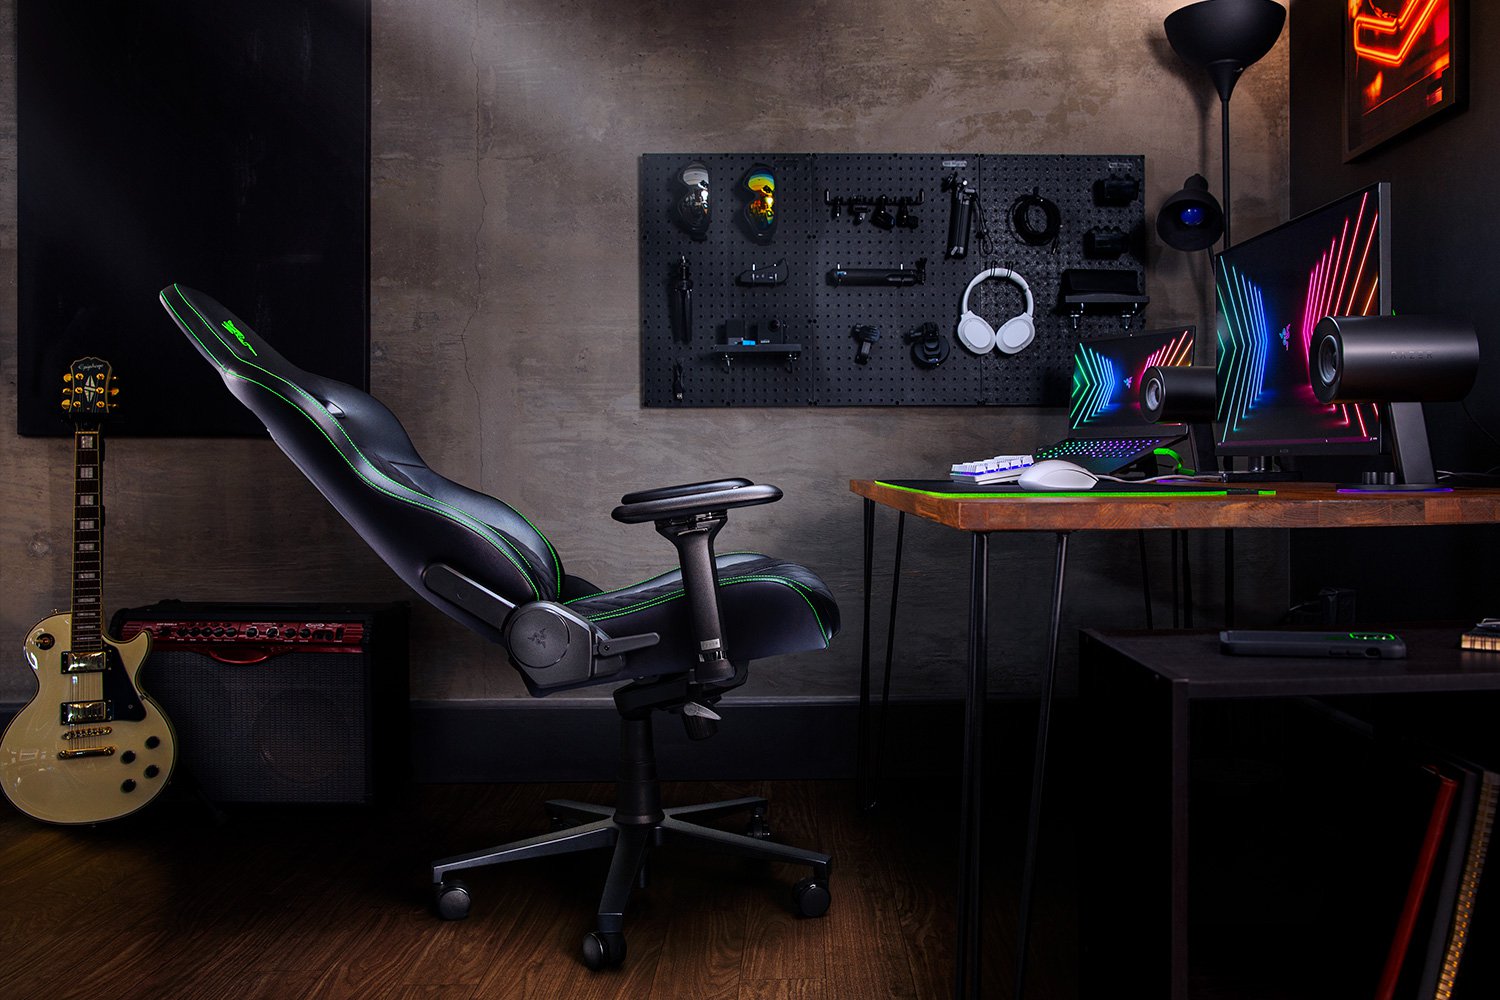 Razer Enki Gaming Chair, green